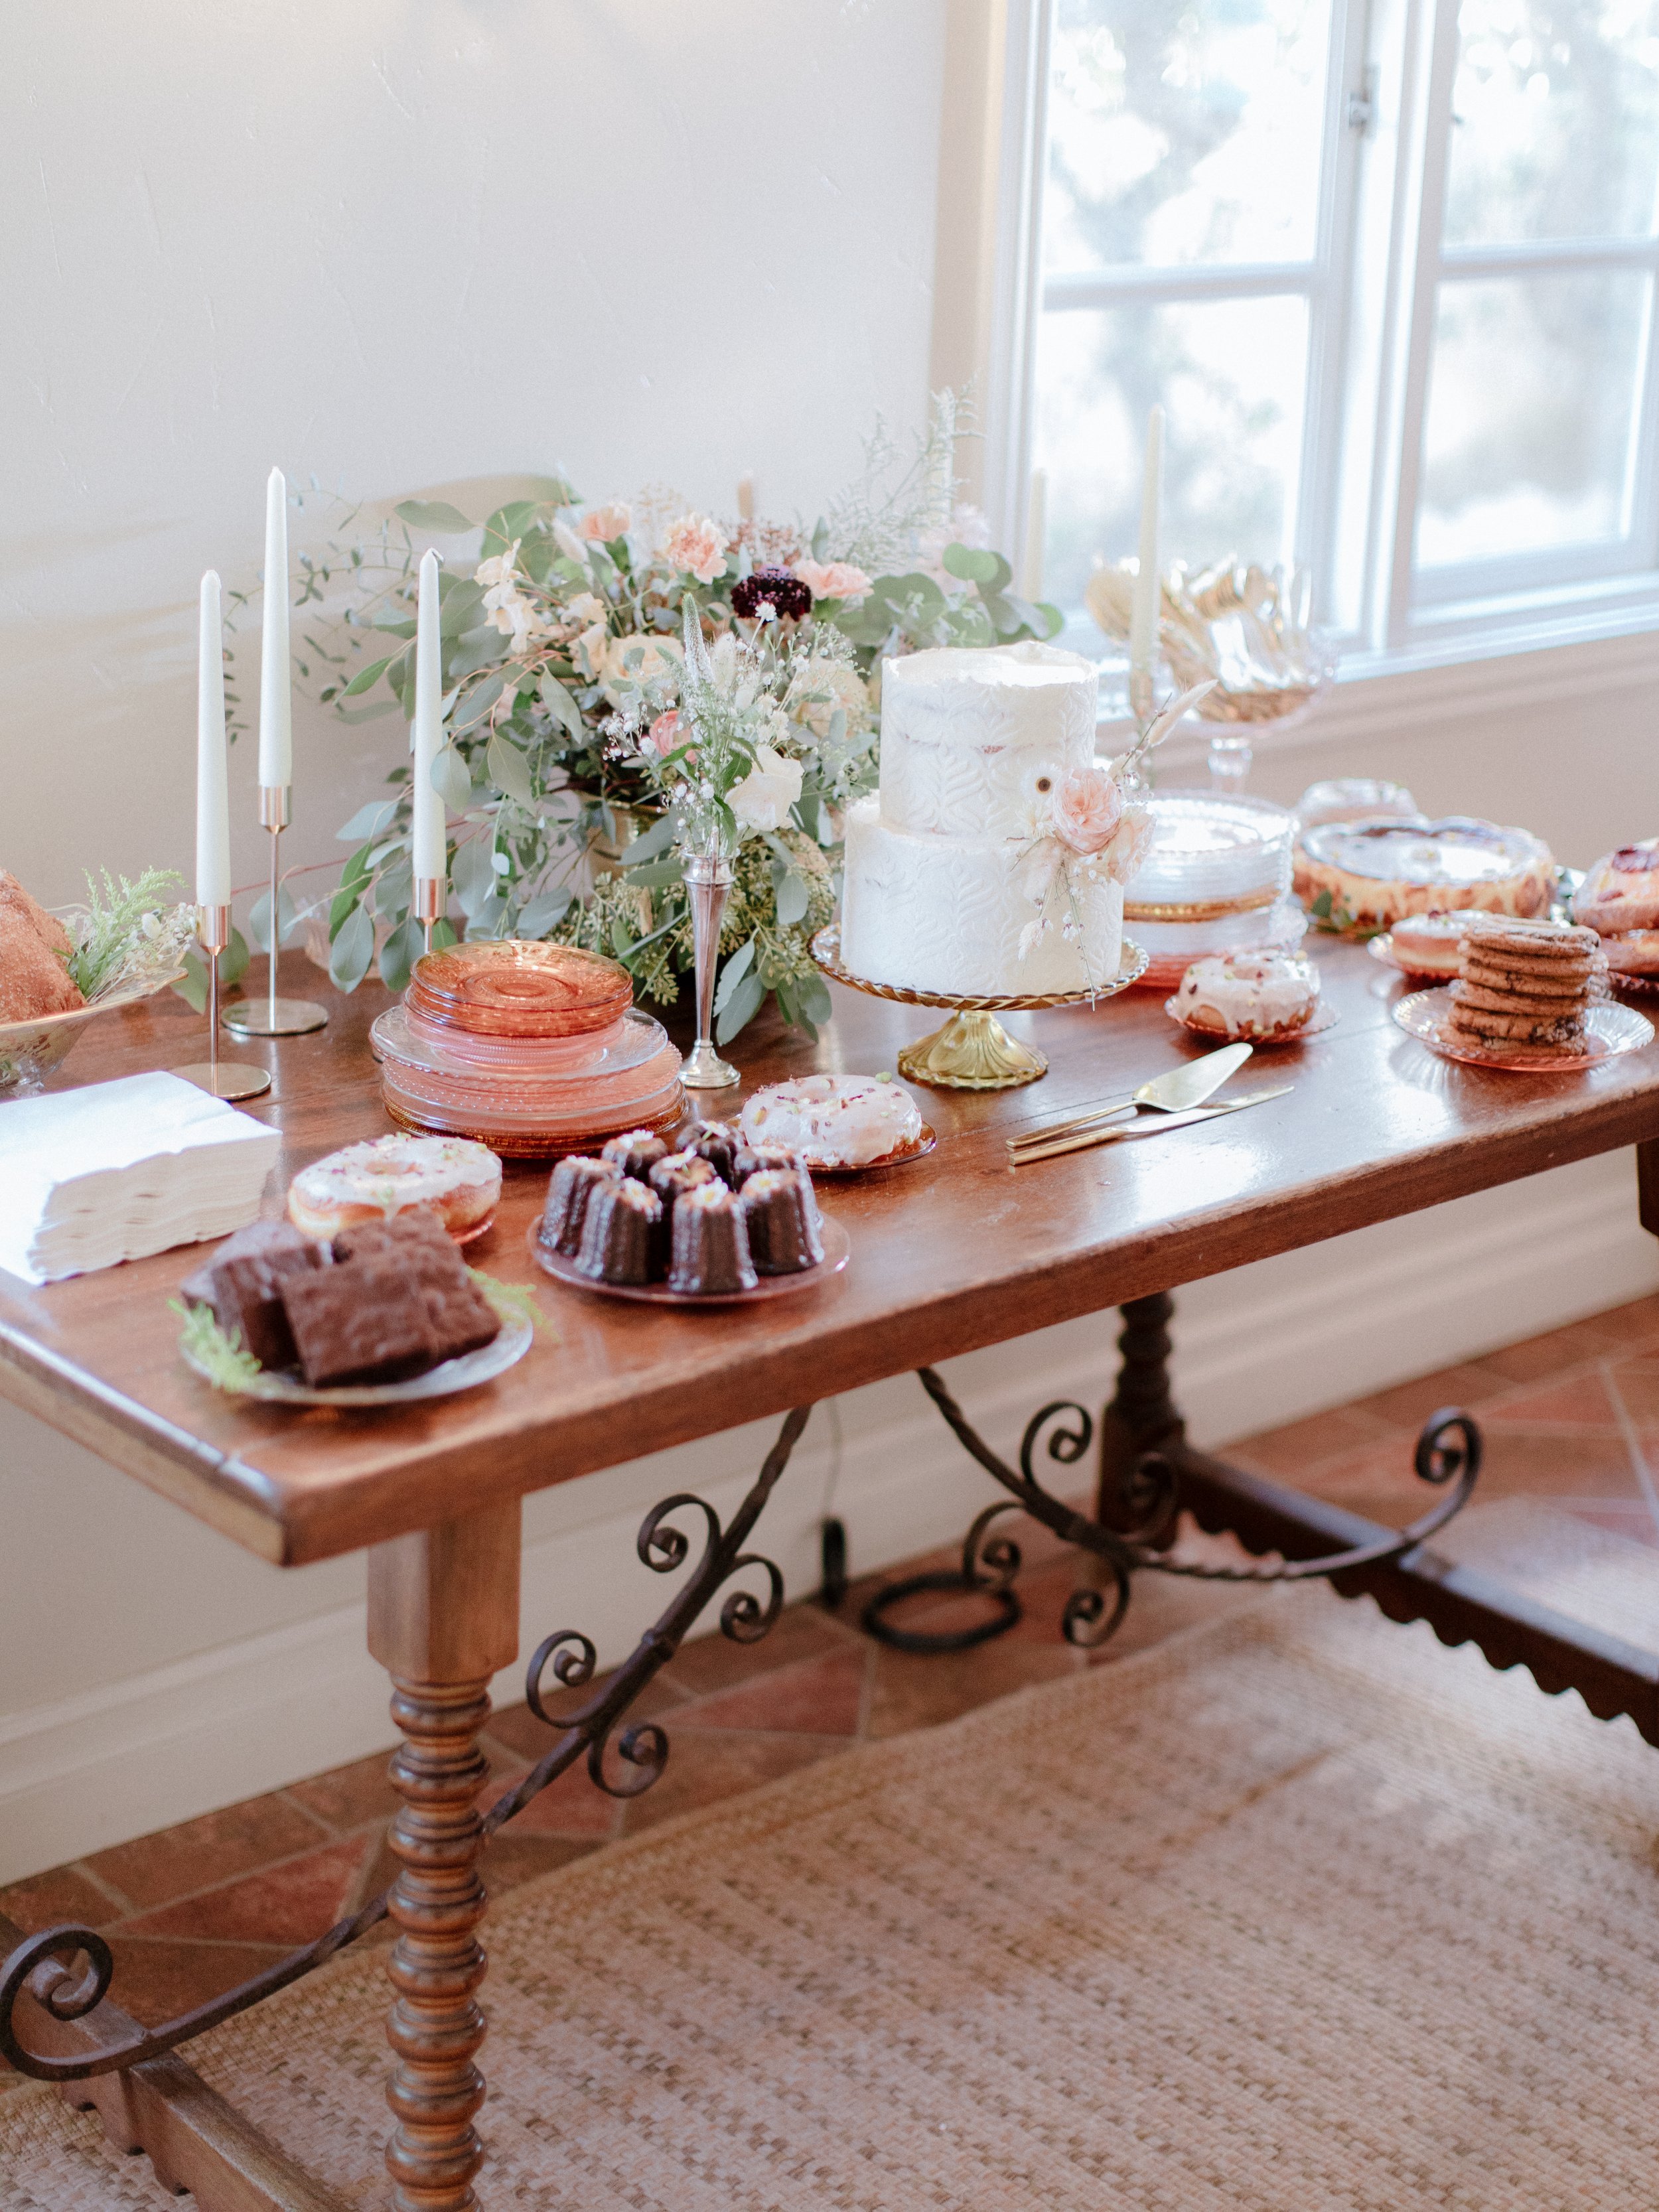 www.santabarbarawedding.com | Chris J. Evans | Dessert Table and Wedding Cake at Reception